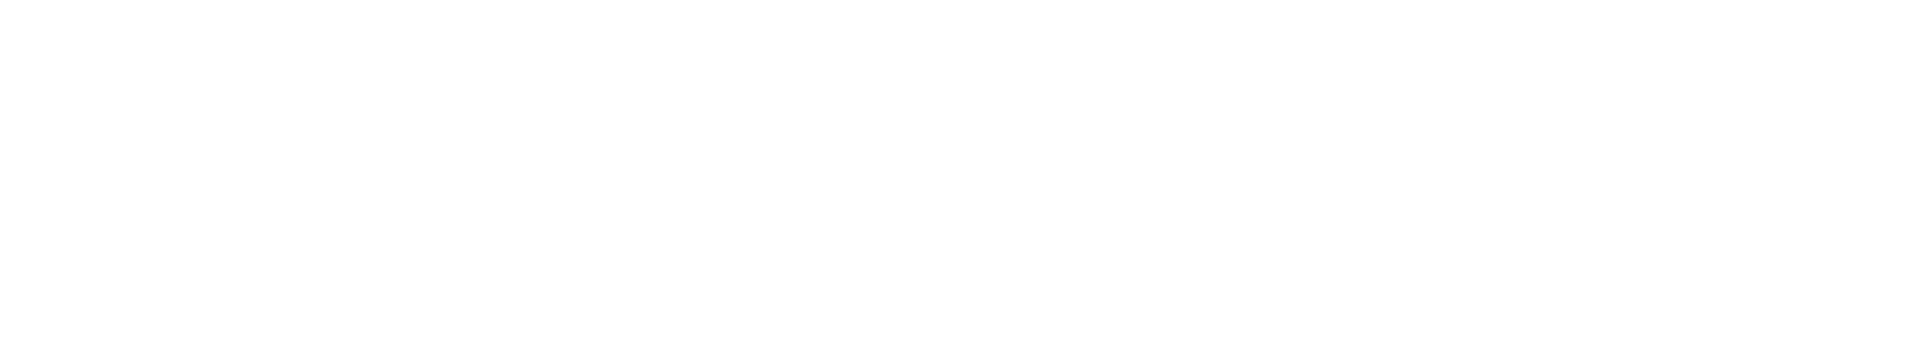 Hillpointe logo.